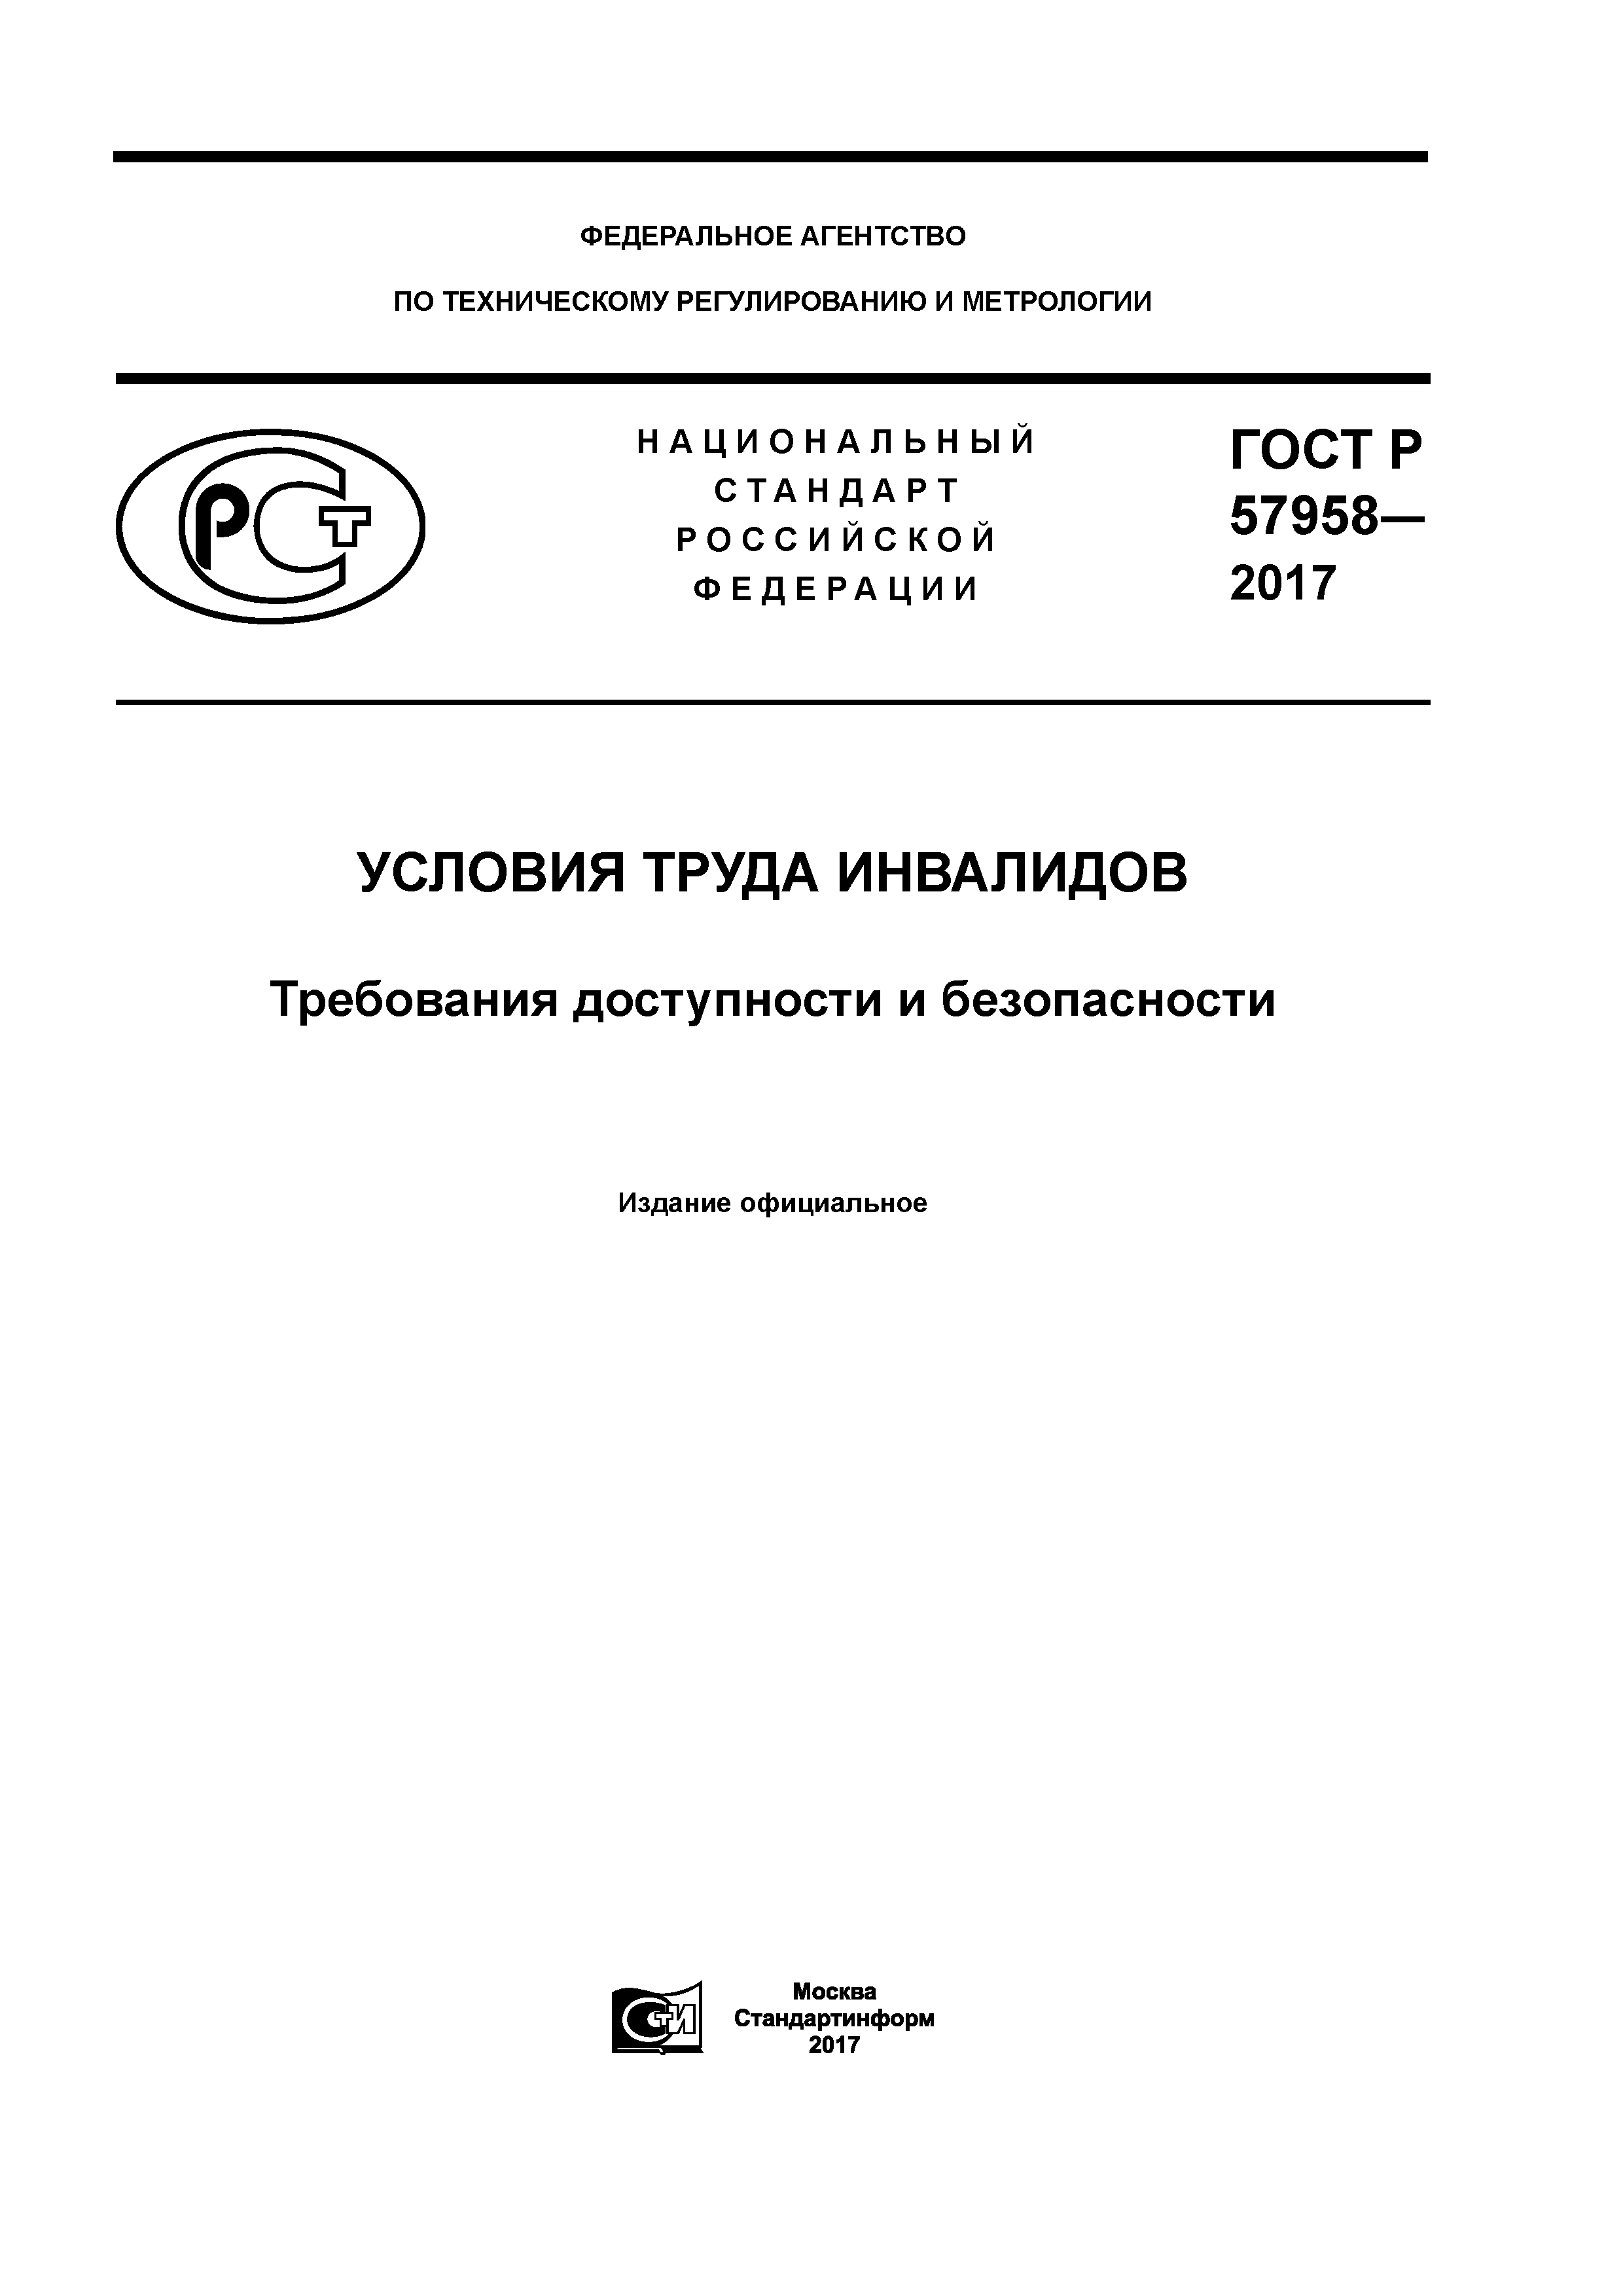 ГОСТ Р 57958-2017